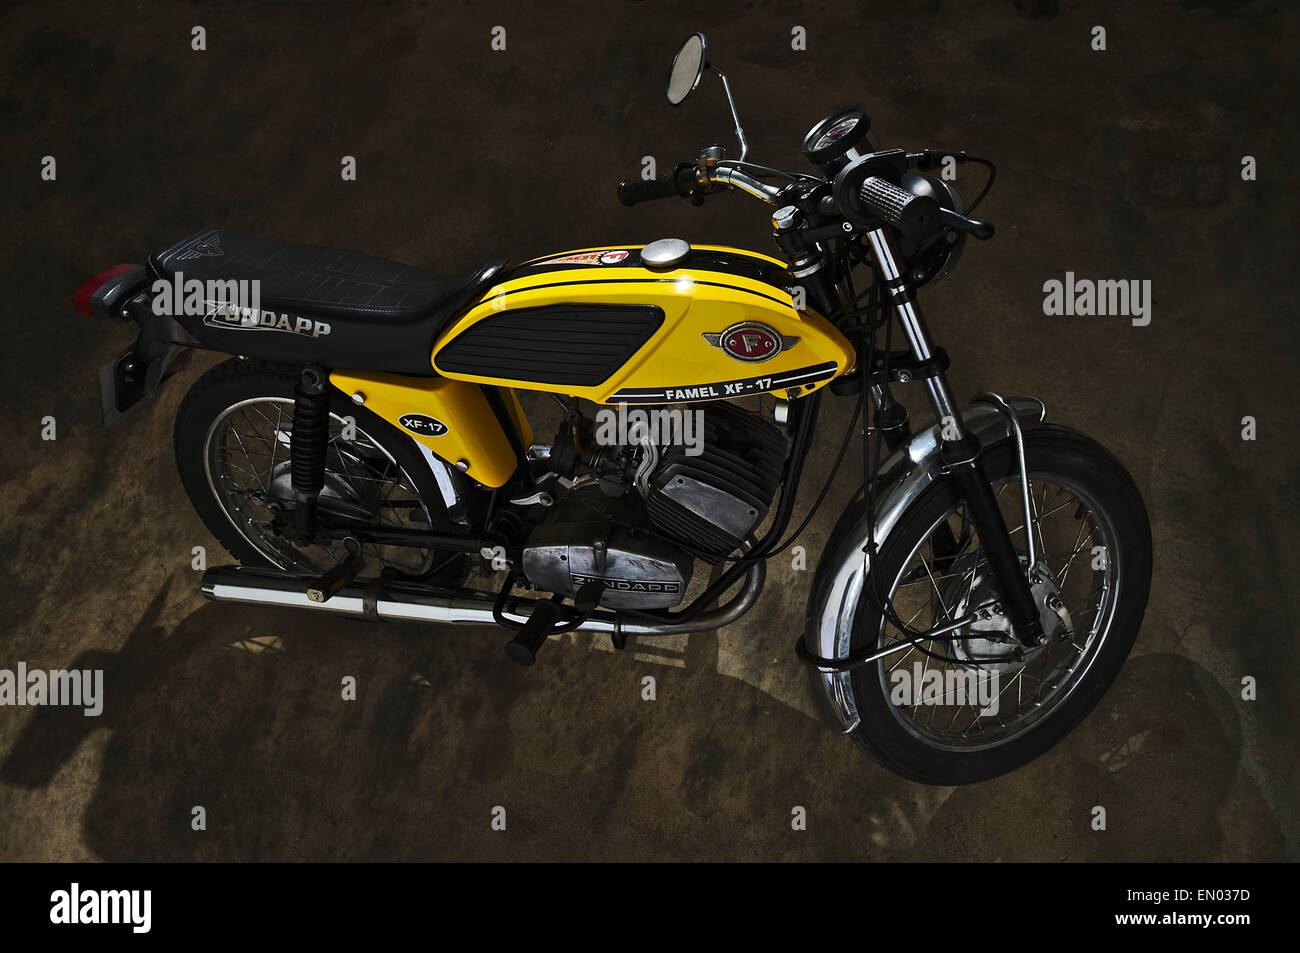 Classic Moto zundapp xf-17 dans le garage Photo Stock - Alamy